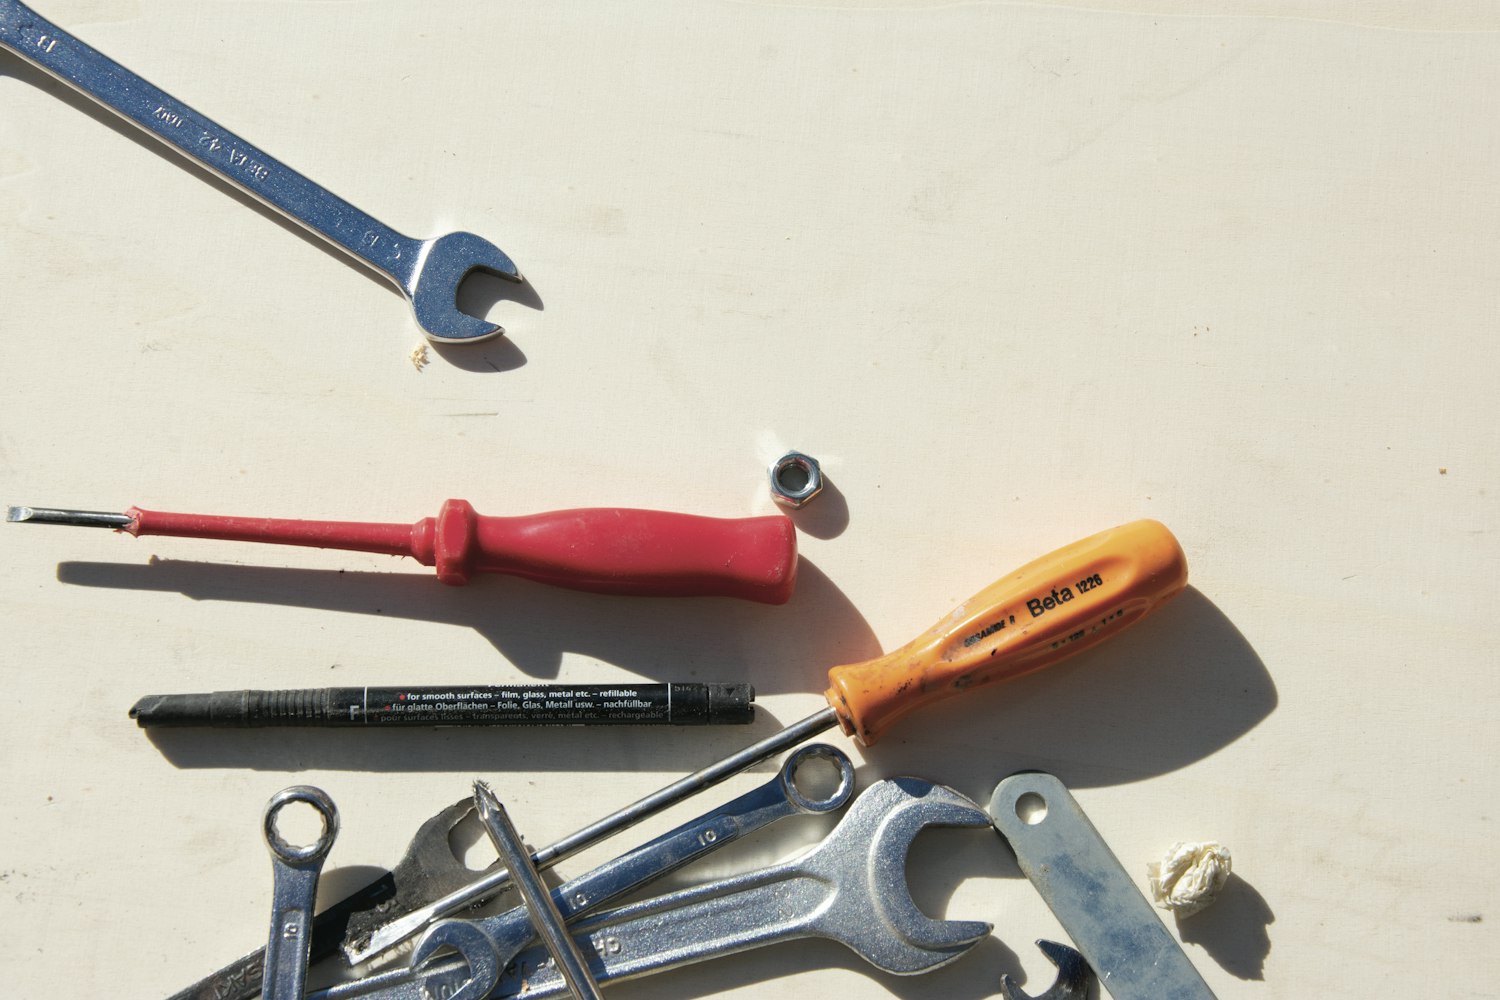 tools on ground